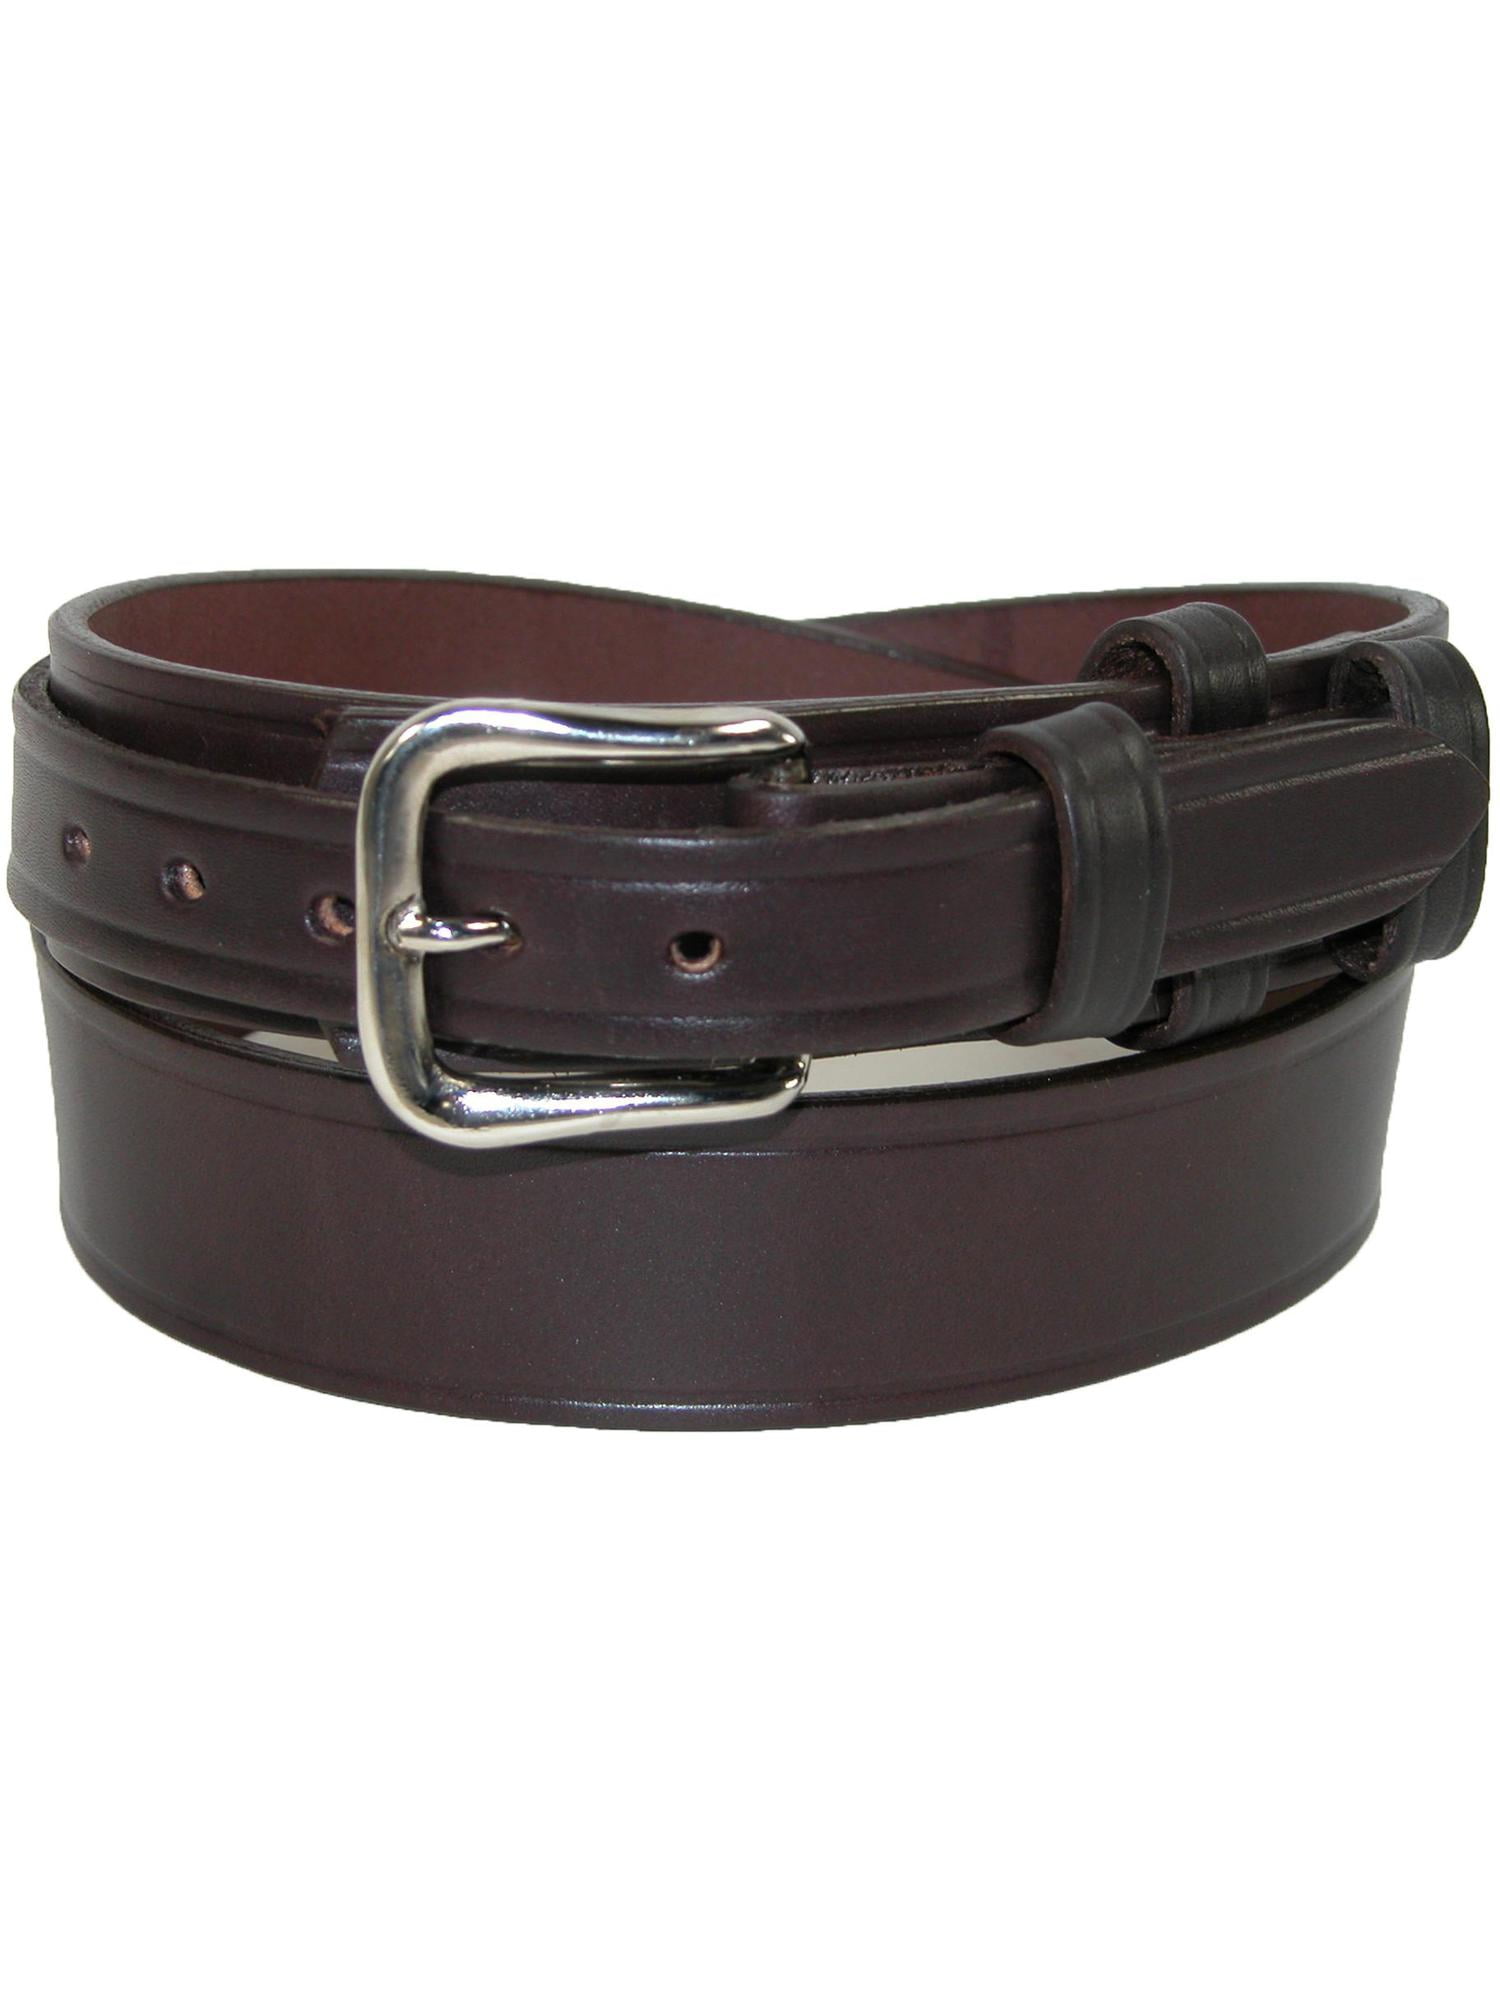 Big & Tall Durable Genuine Leather Mens Uniform Work Utility Belt 1-1/2" Wide 